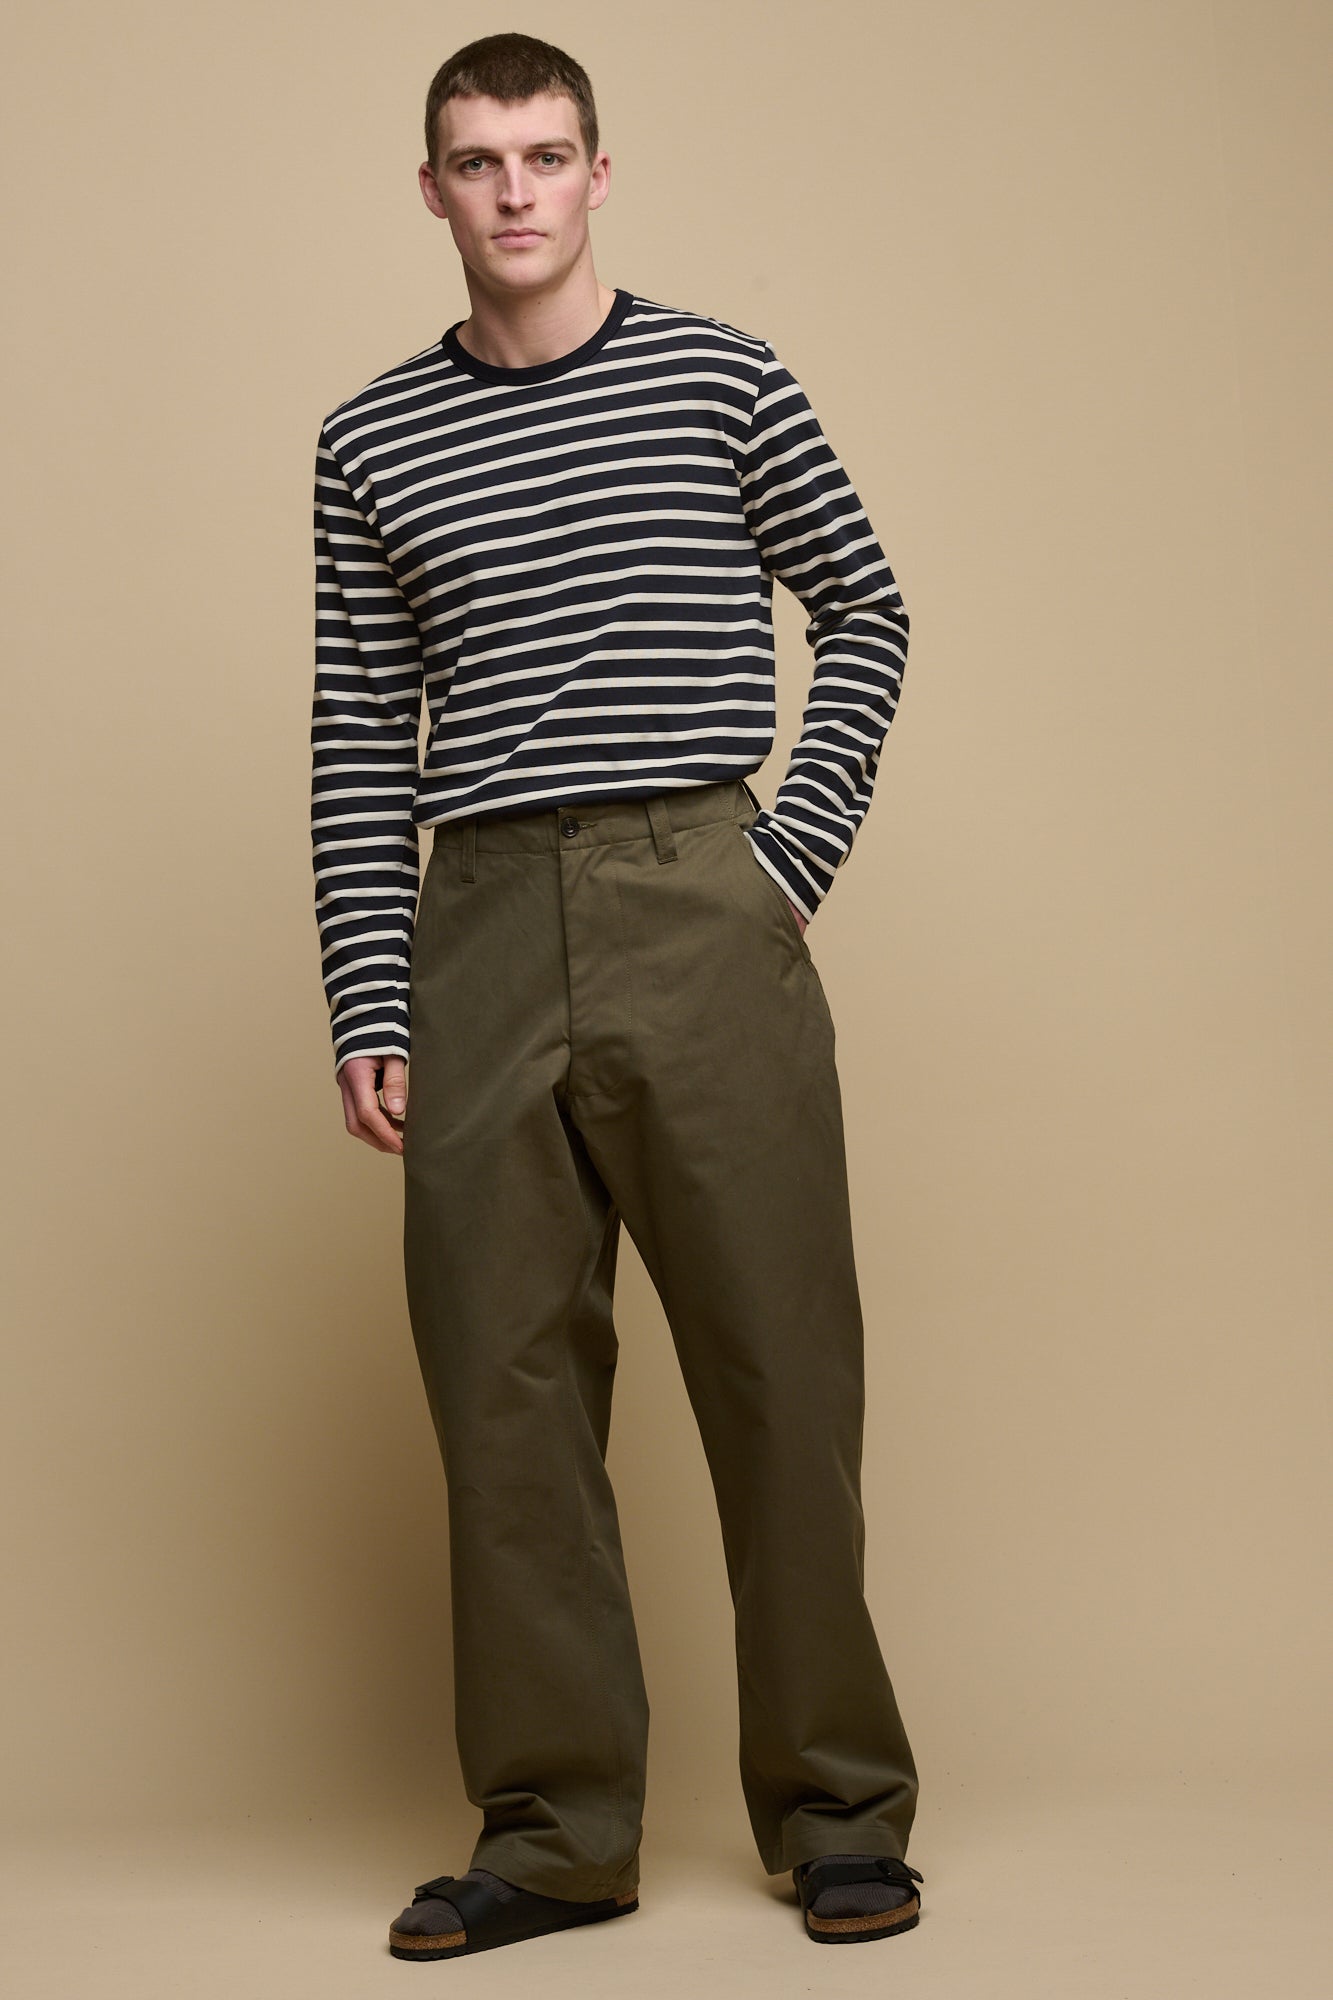 Men's Field Trouser - Olive - Community Clothing